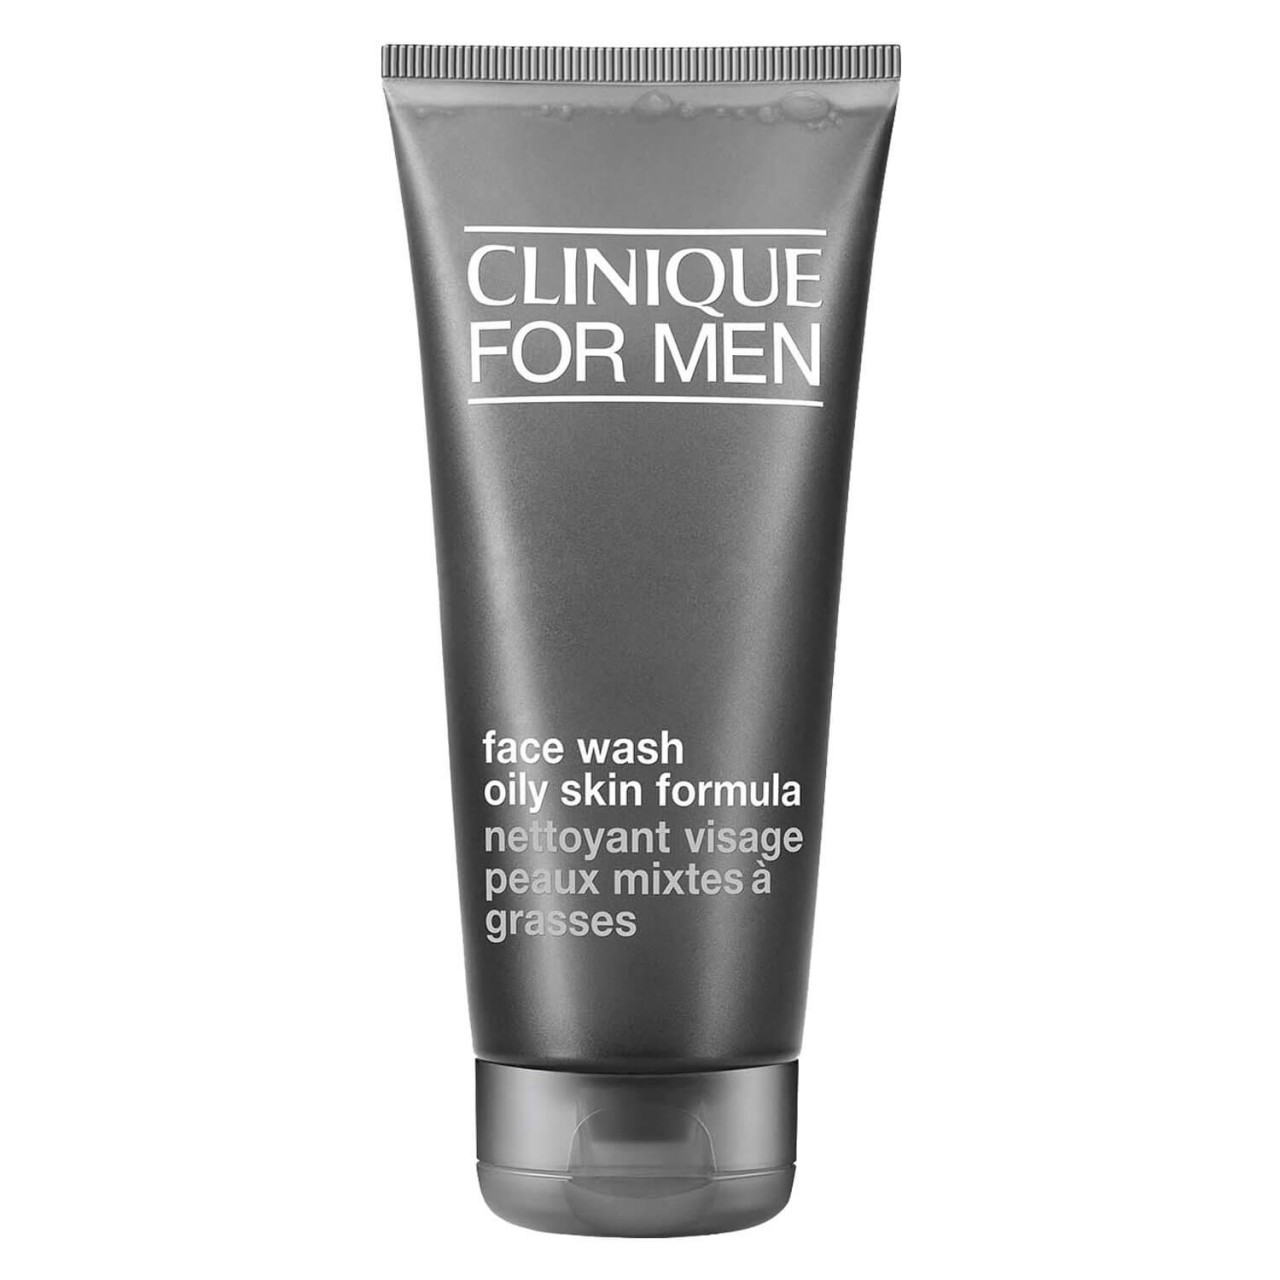 Clinique - Clinique for Men Face Wash Oily Skin Formula